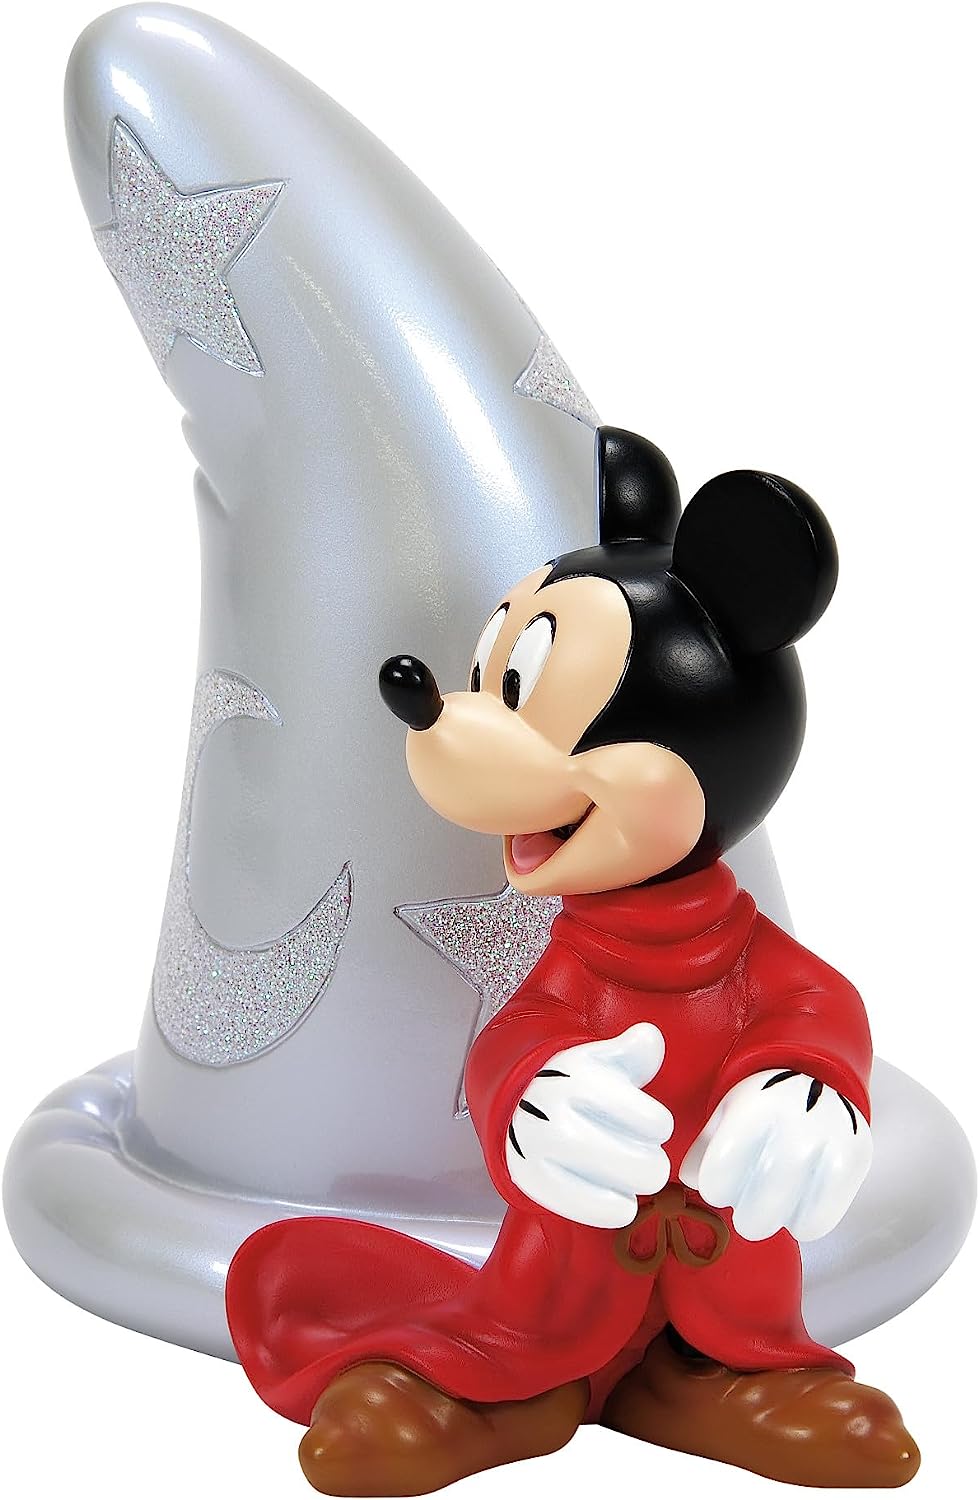 Disney-Mickey-Mouse-Zauberhut-D100-Figur-berlindeluxe-hut-maus-zauberer-seite